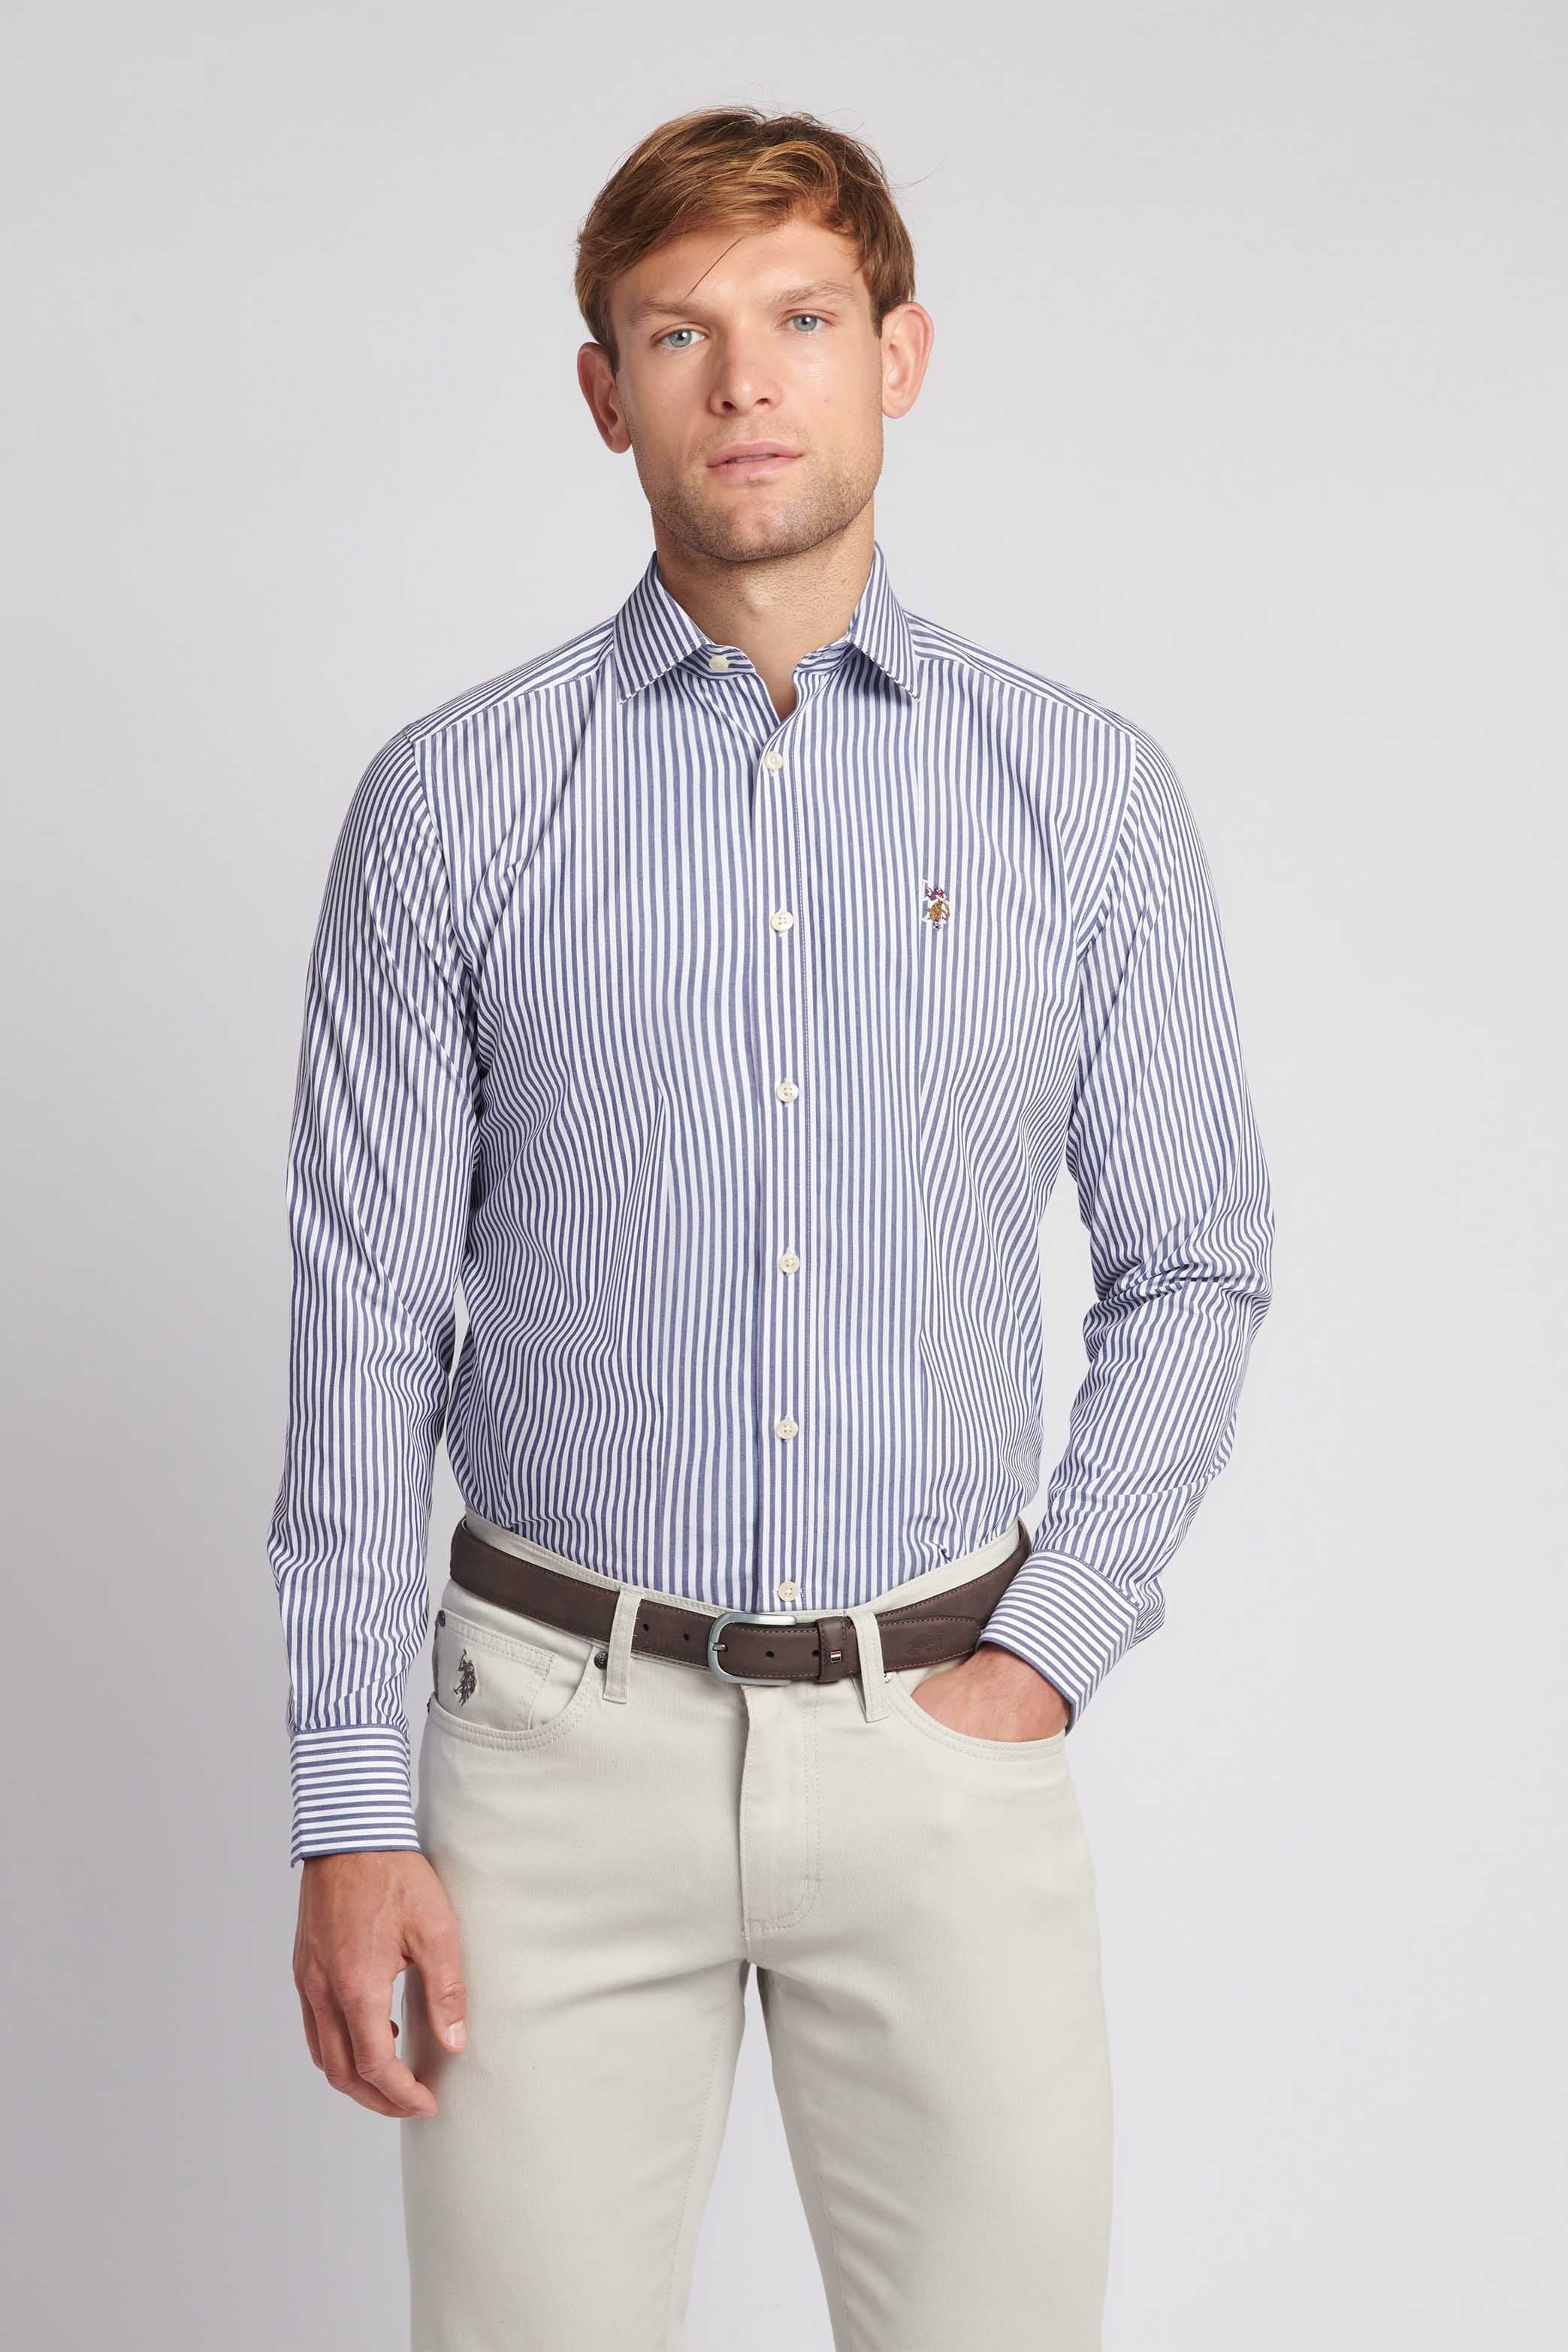 U.S. Polo Assn. Mens Long Sleeve Poplin Bengal Stripe Shirt in Navy Blue